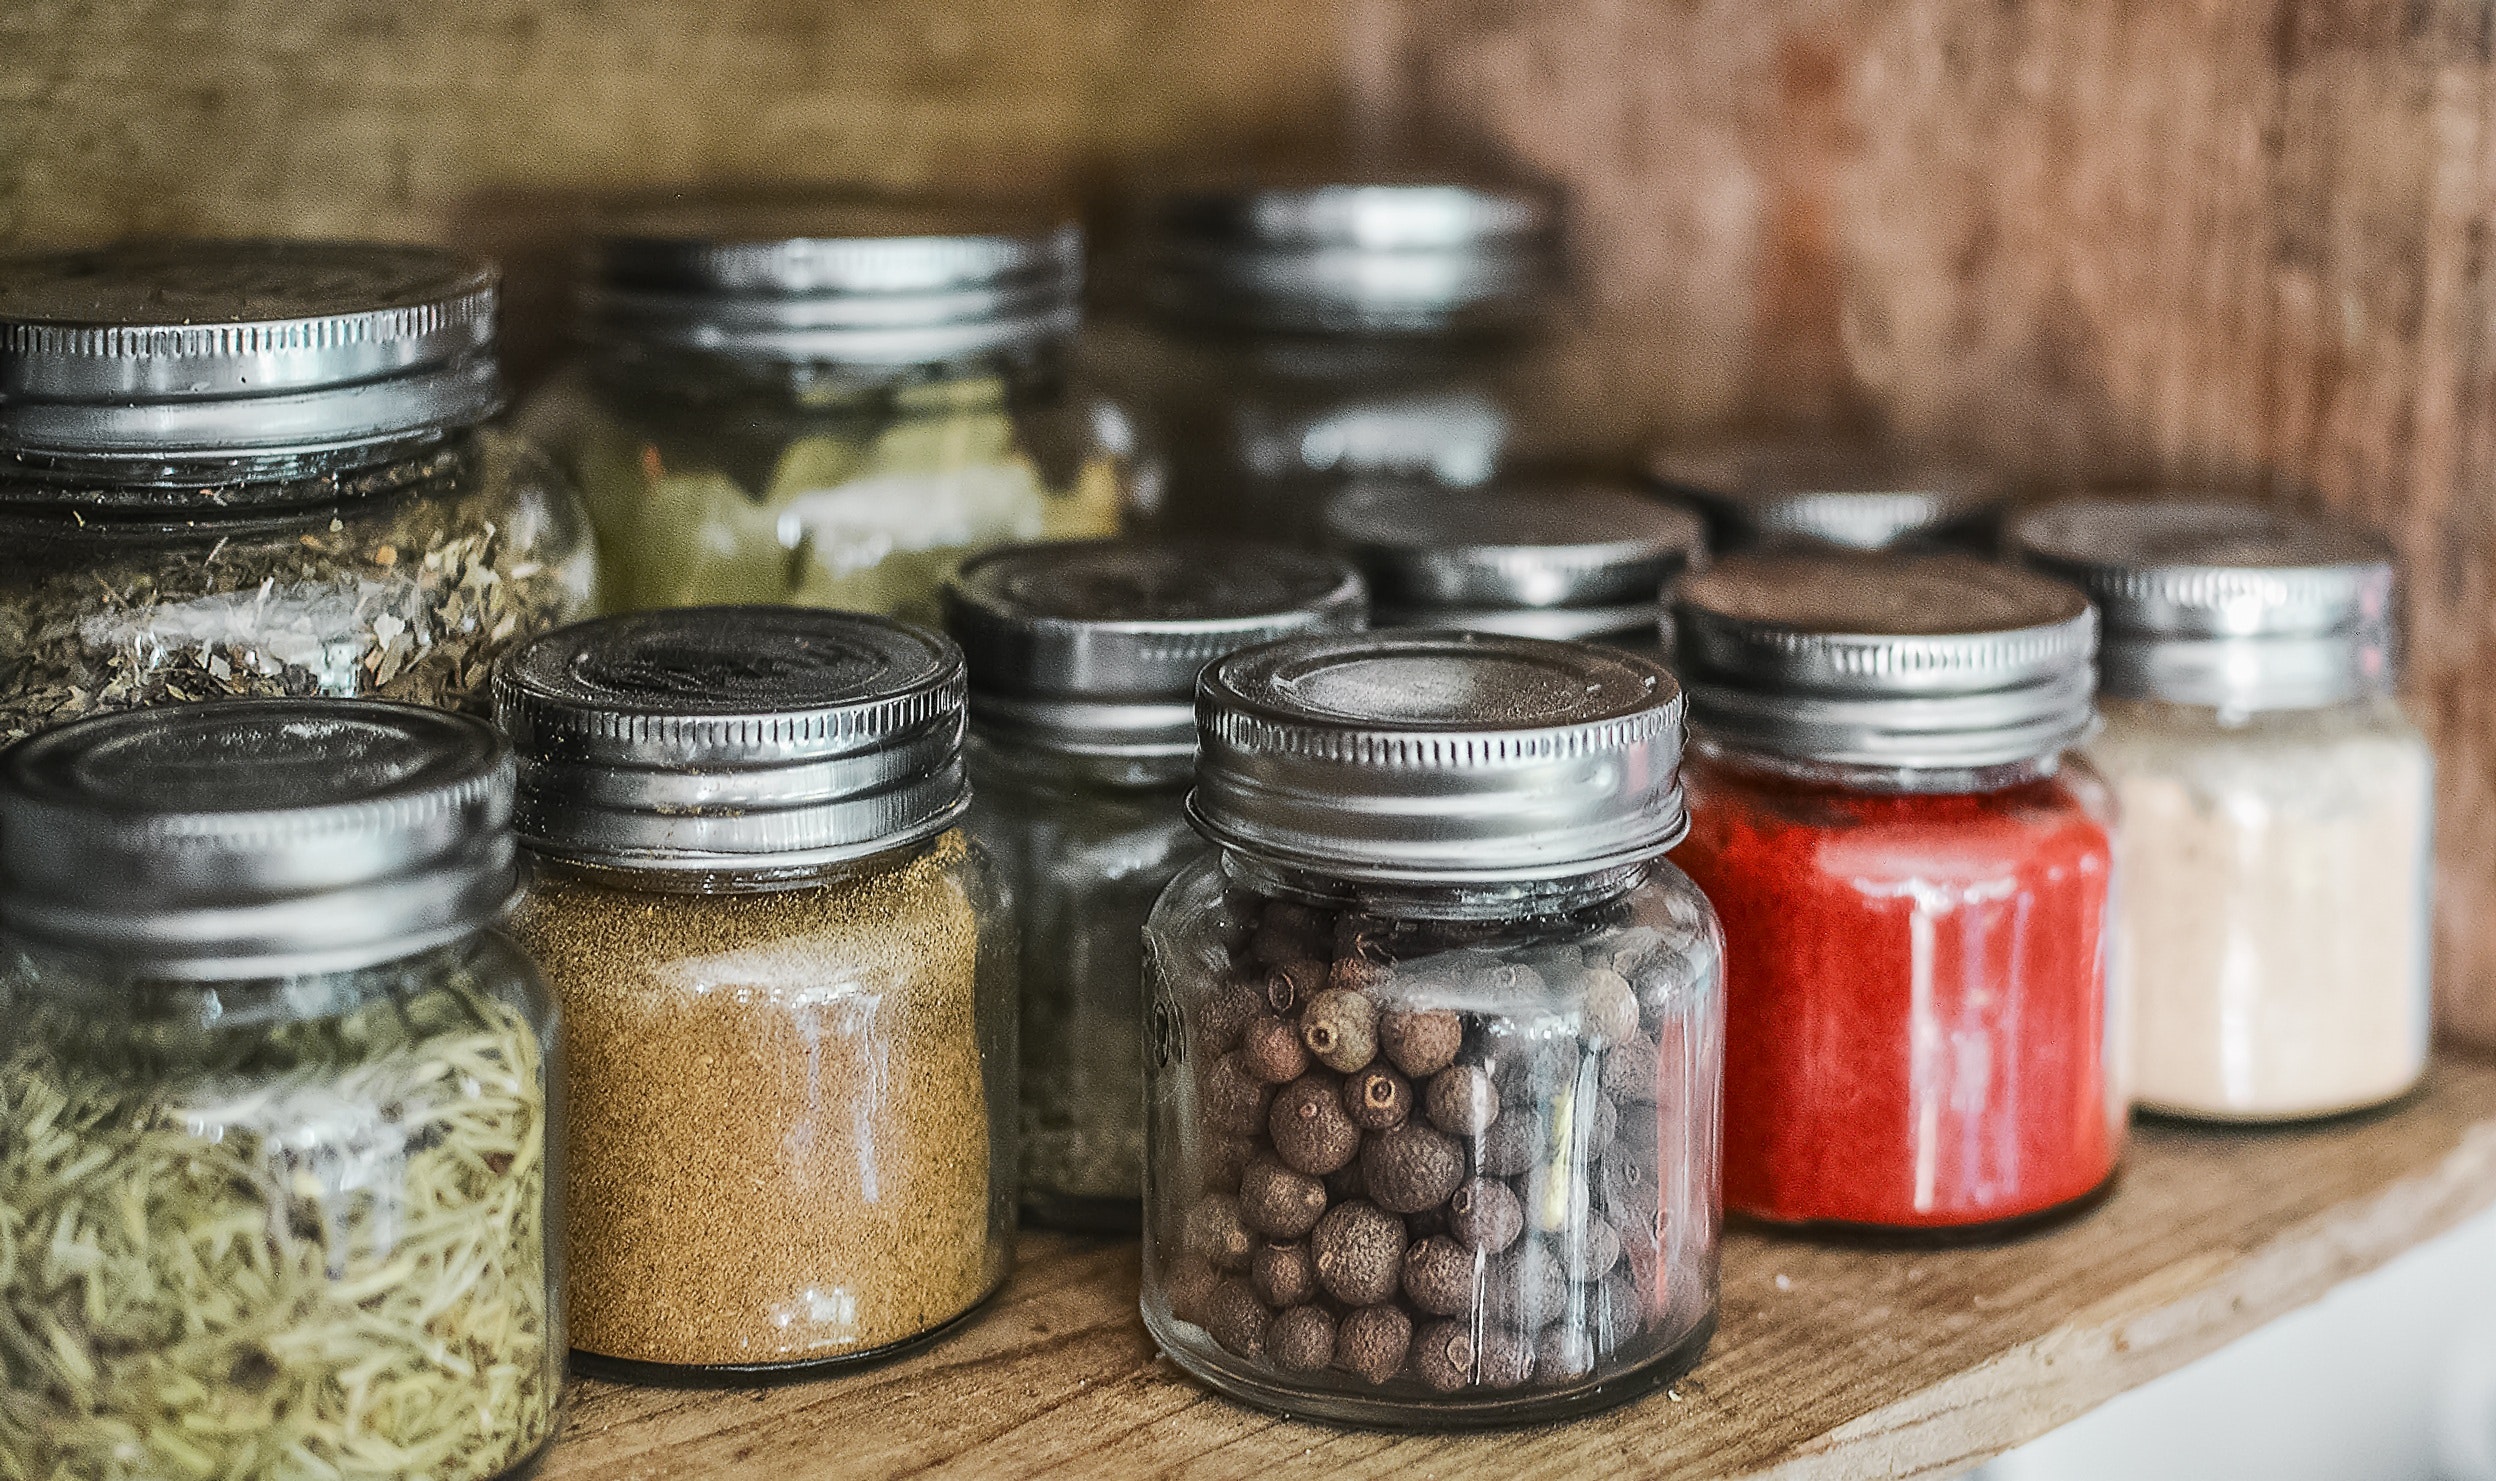 Reusable glass jars to store food